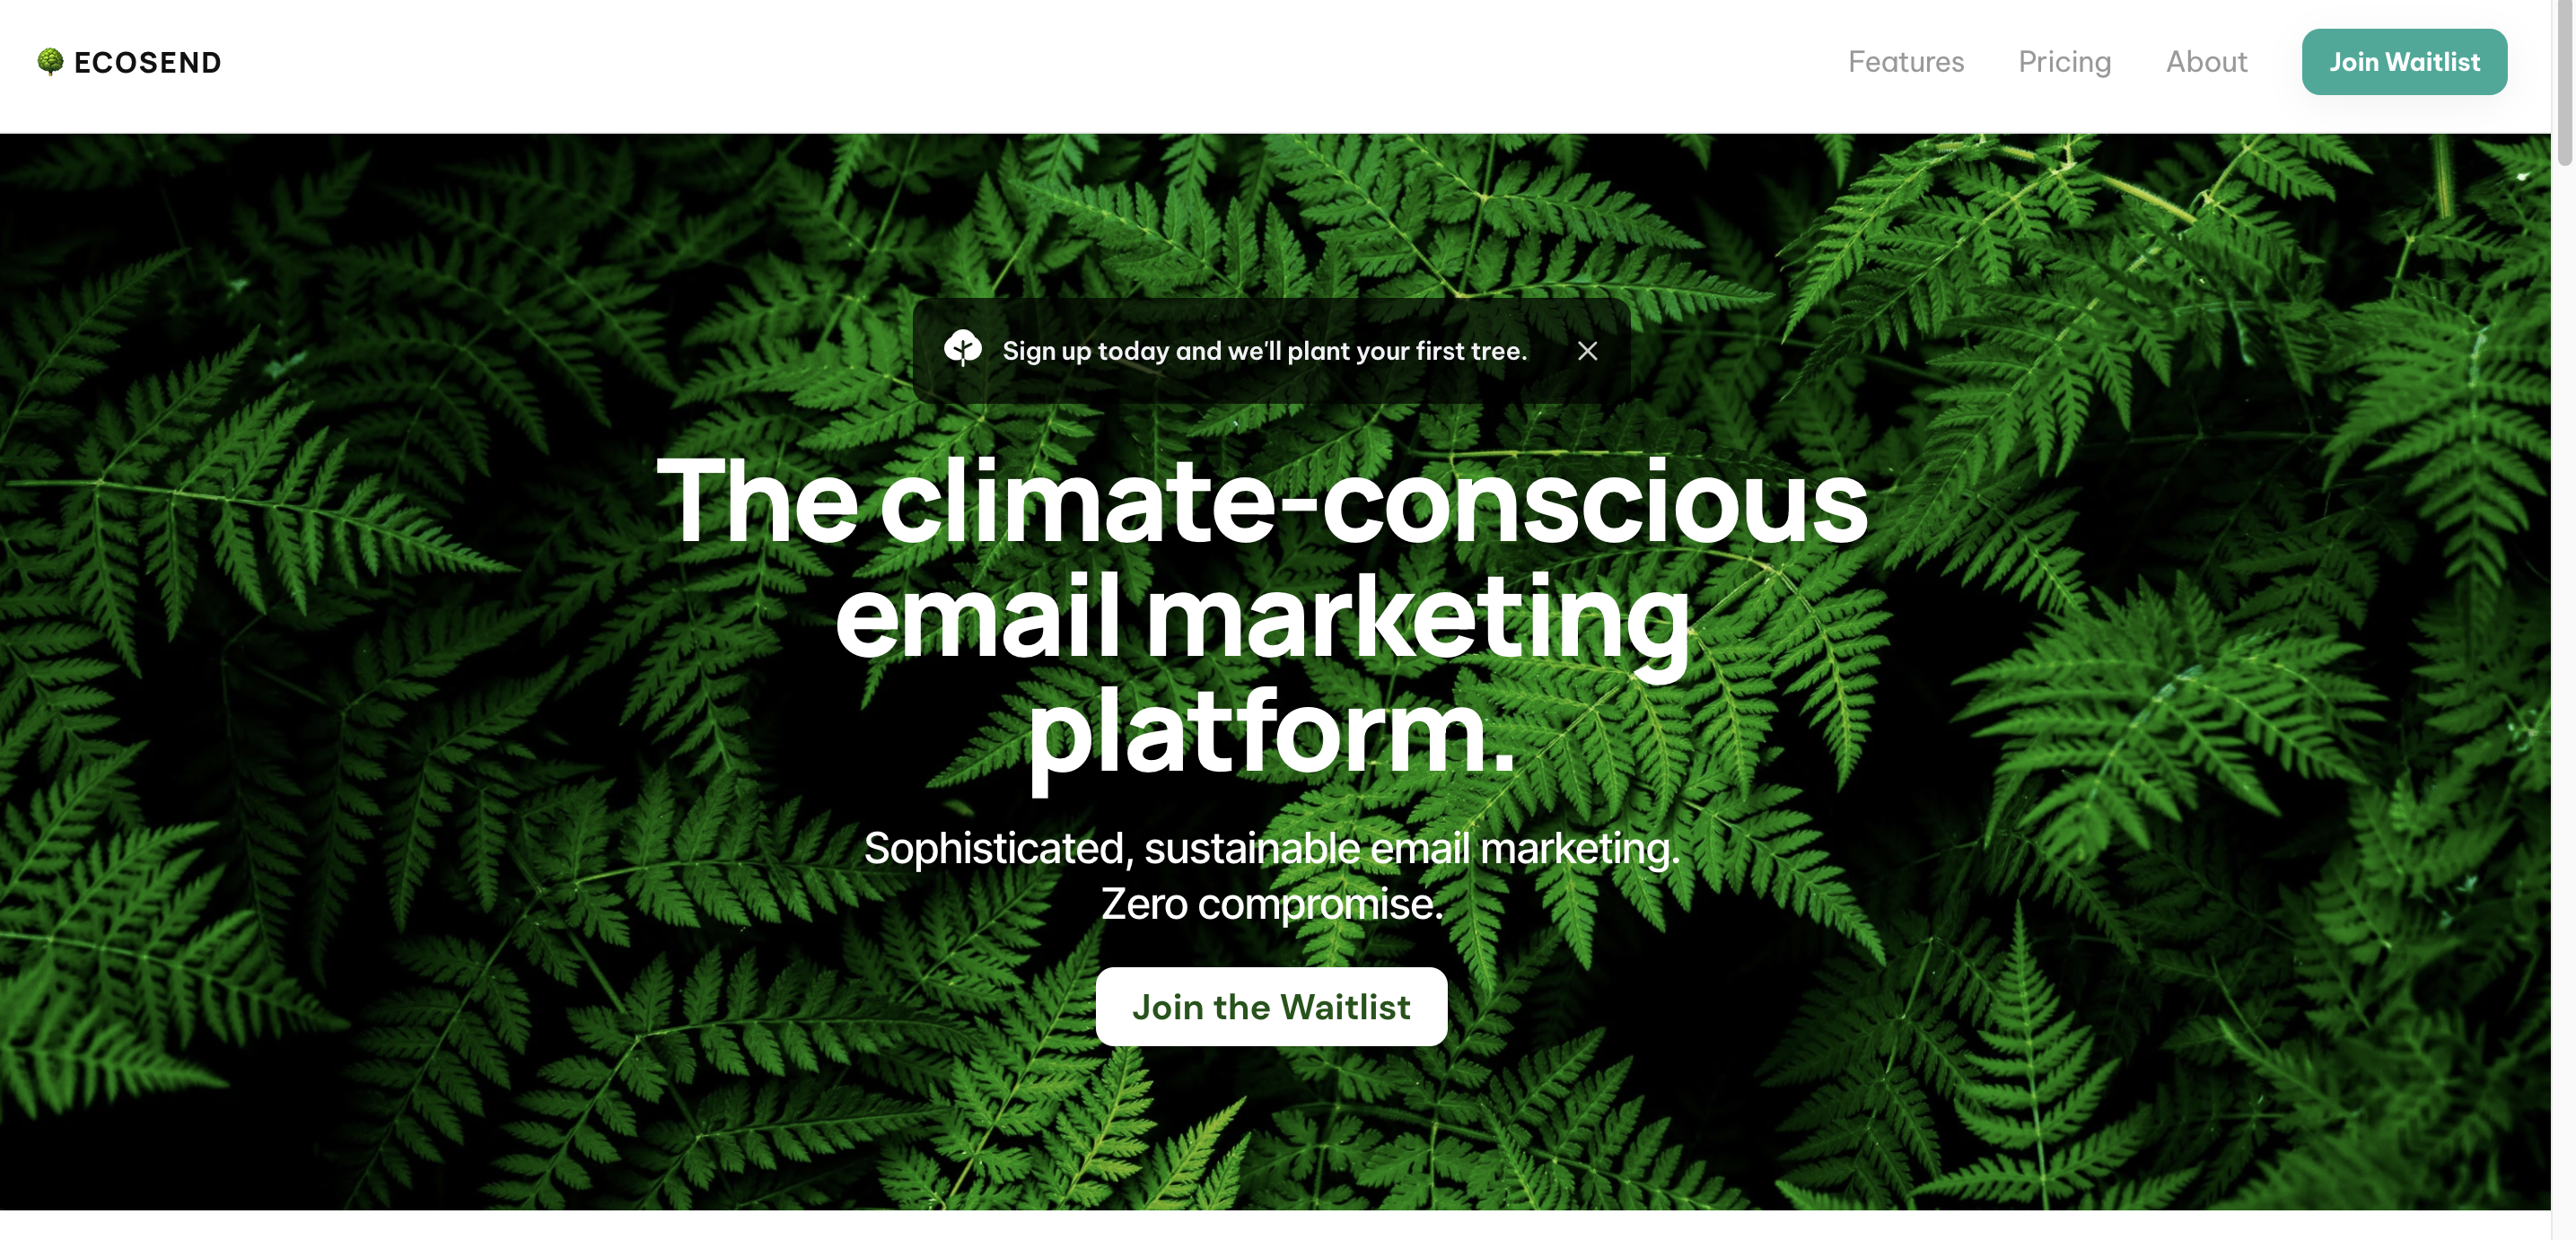 Ecosend email marketing ecofriendly sustainable